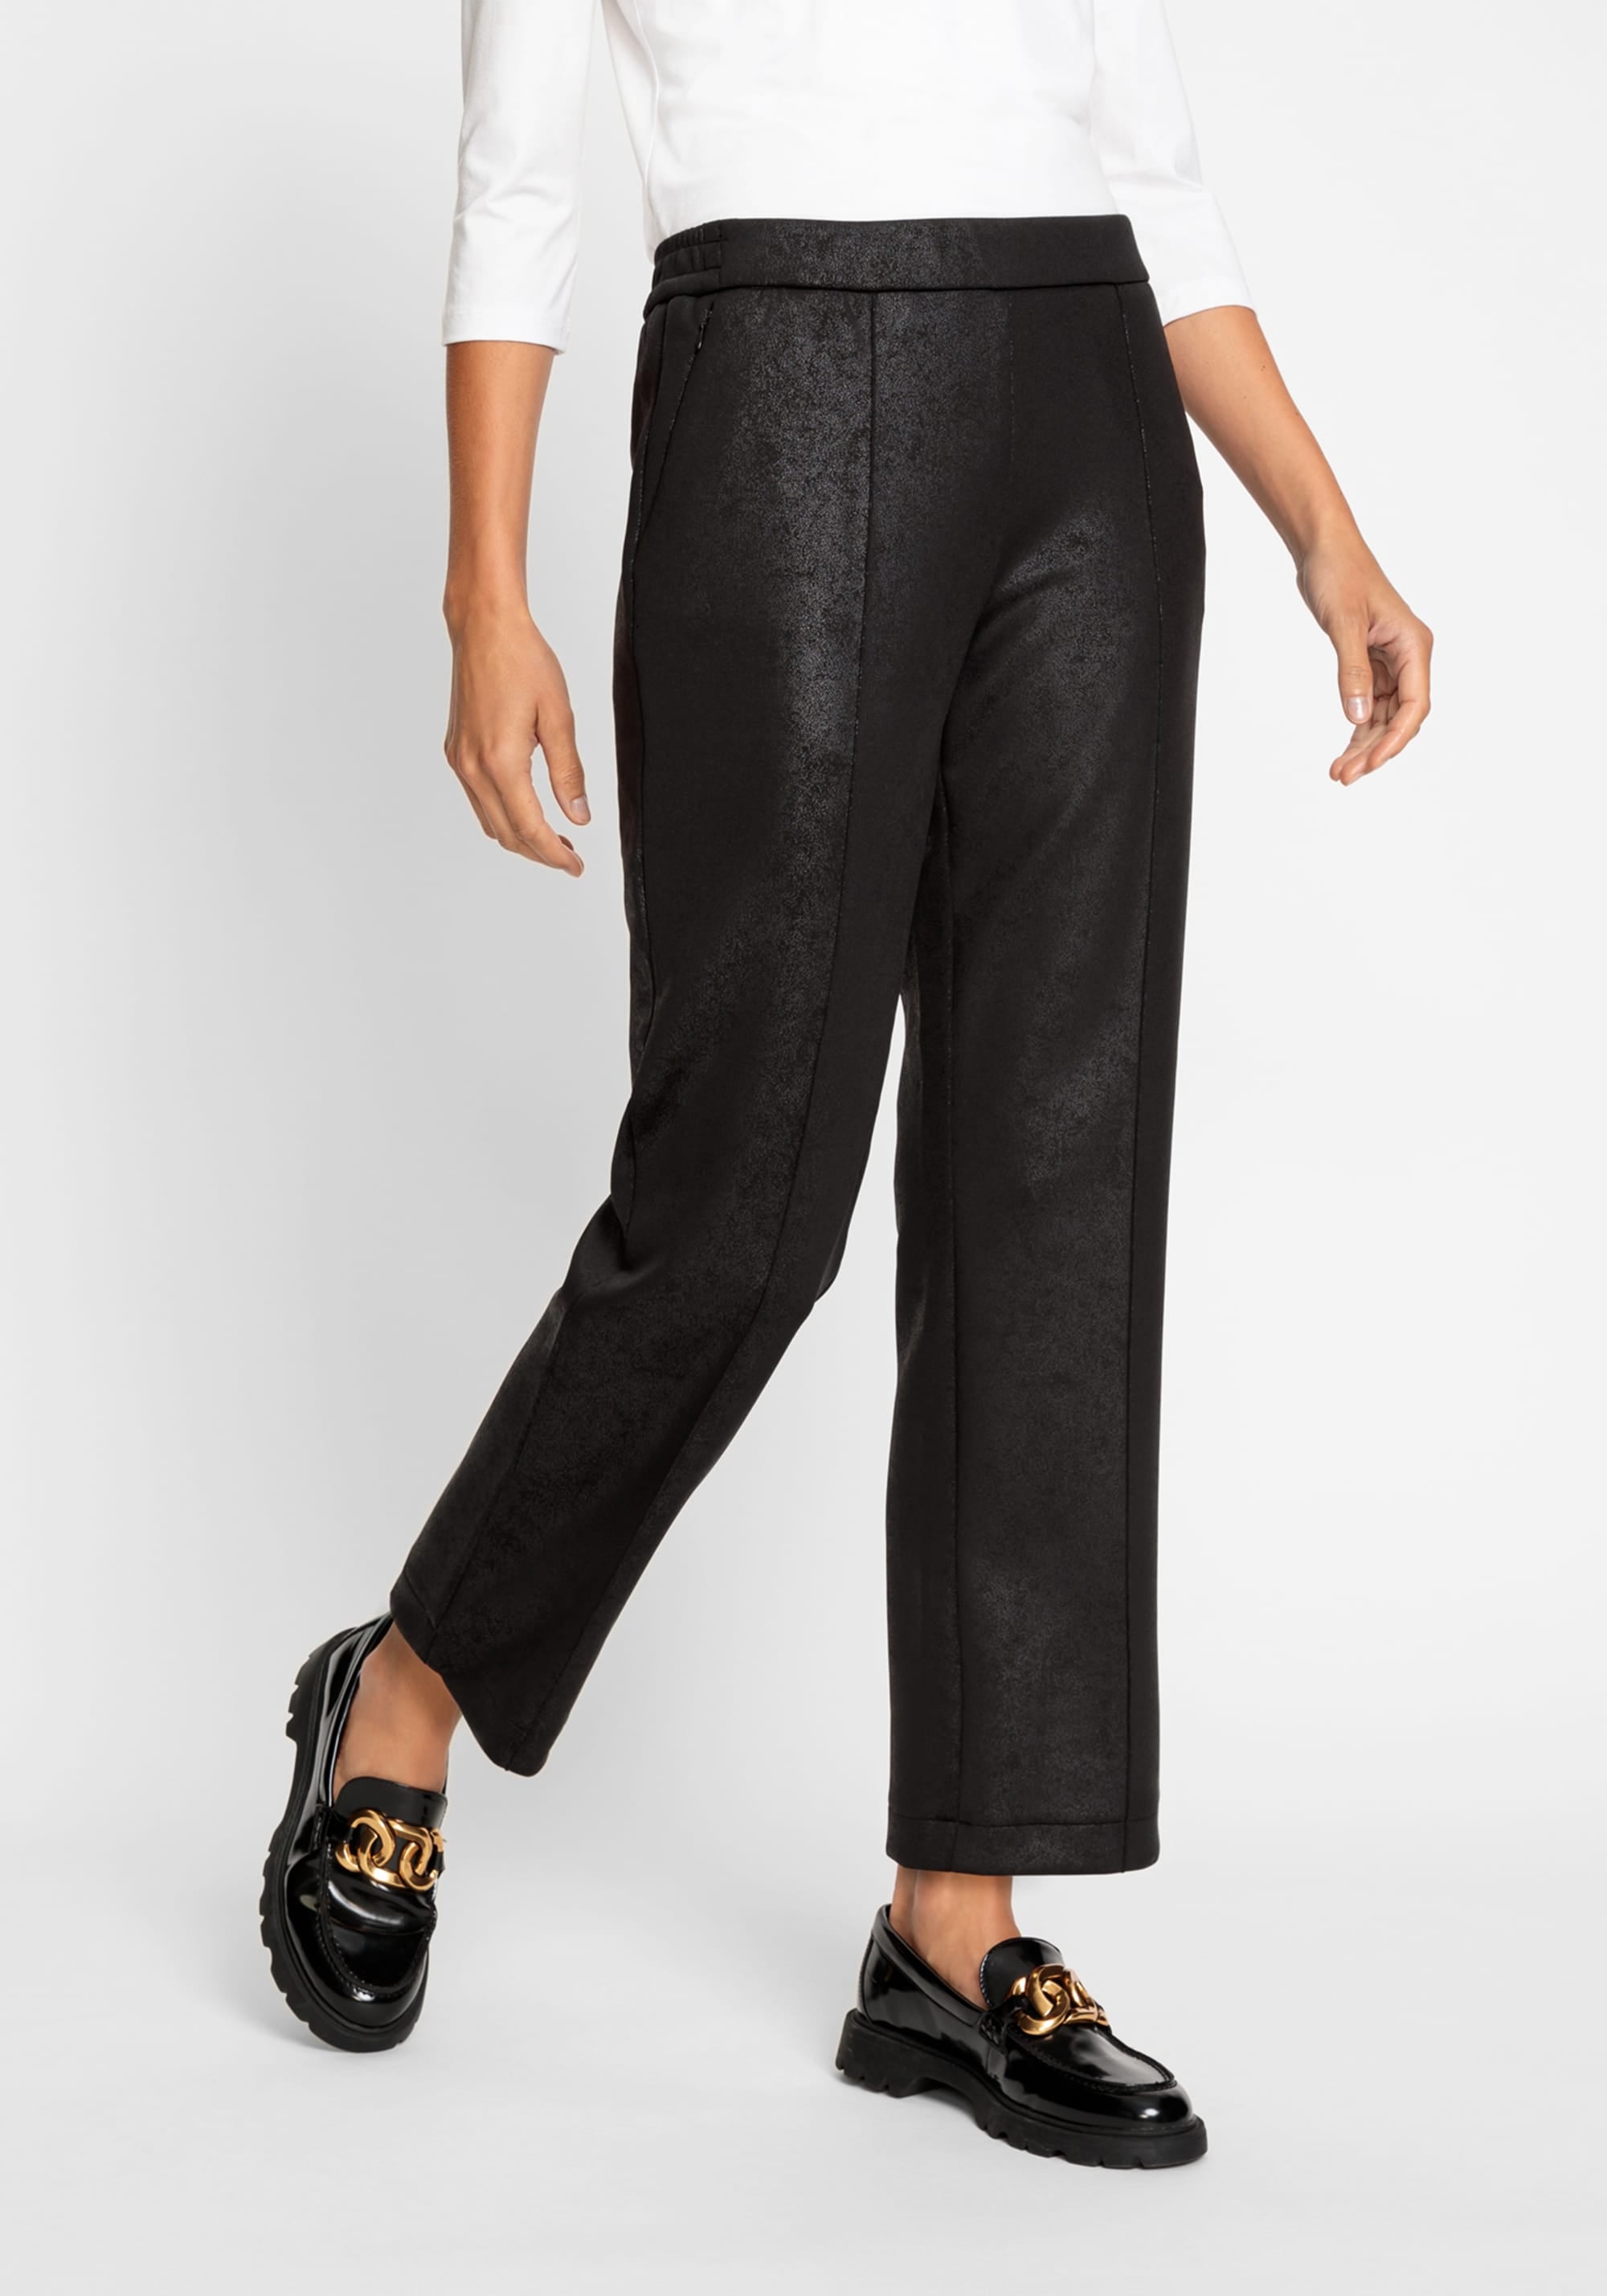 Mona Fit Slim Leg Power Stretch Jean containing REPREVE® - Olsen Fashion  Canada